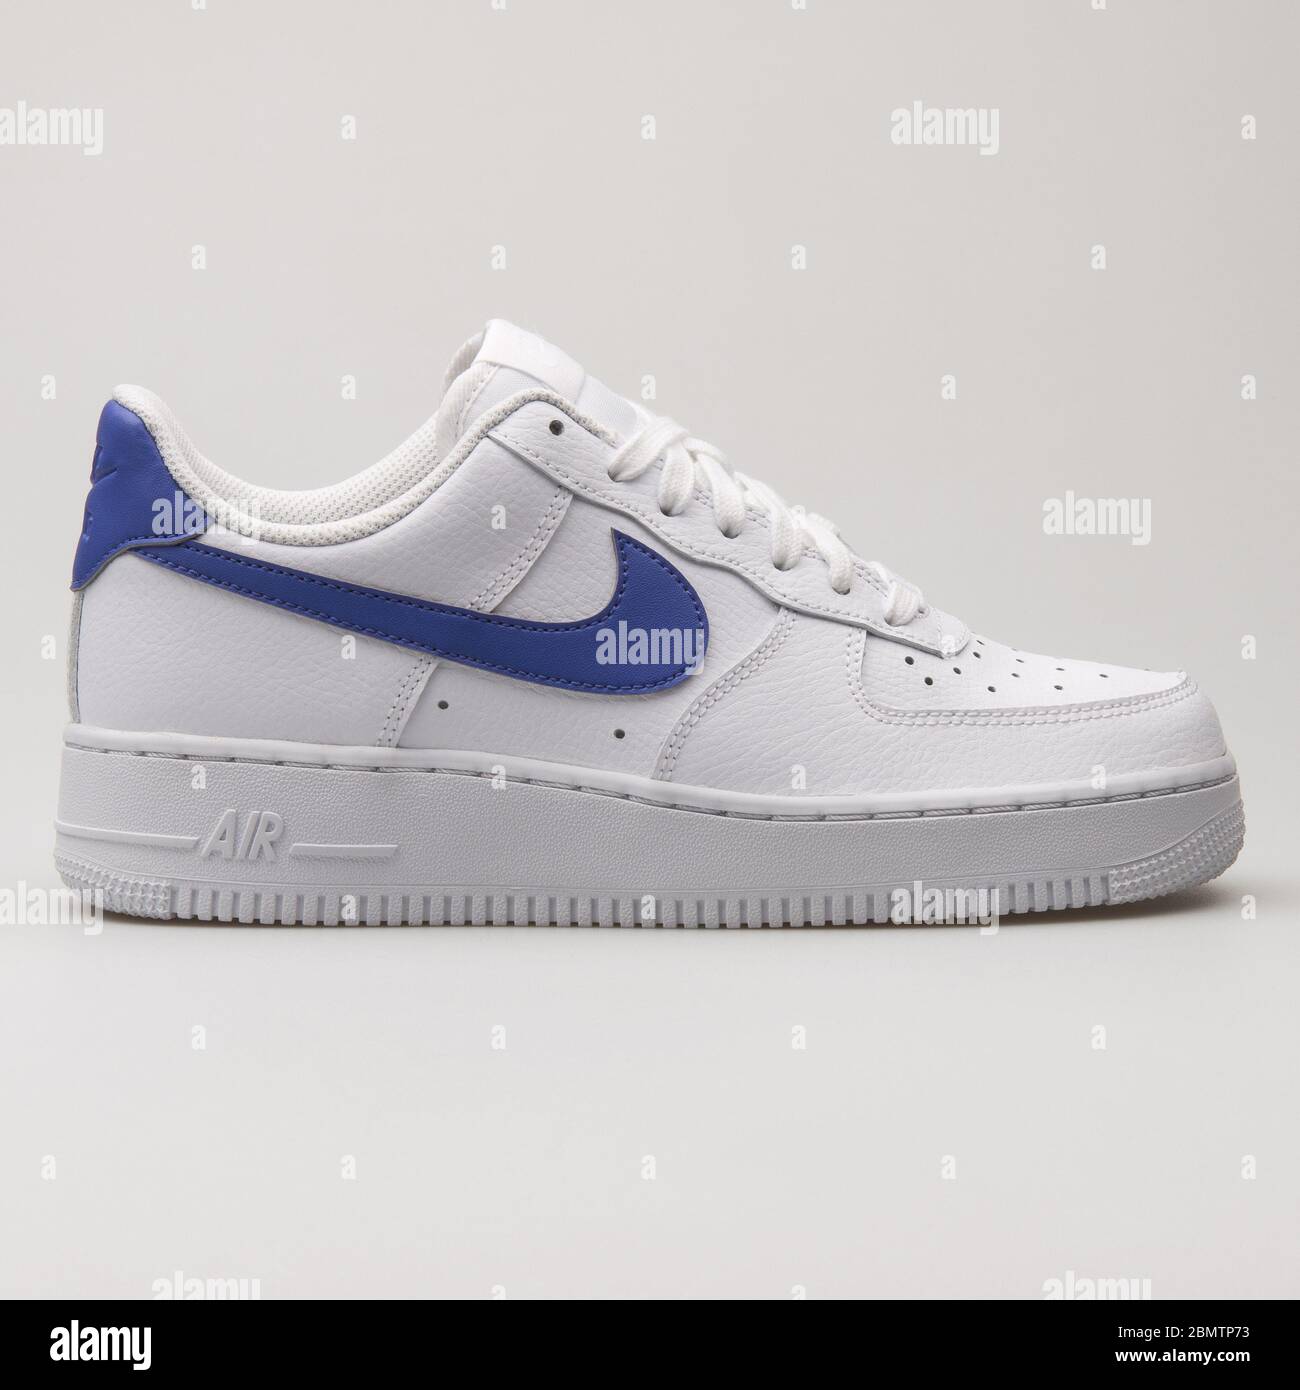 VIENNA, AUSTRIA - 19 FEBBRAIO 2018: Sneaker Nike Air Force 1 07 bianca e  blu su sfondo bianco Foto stock - Alamy